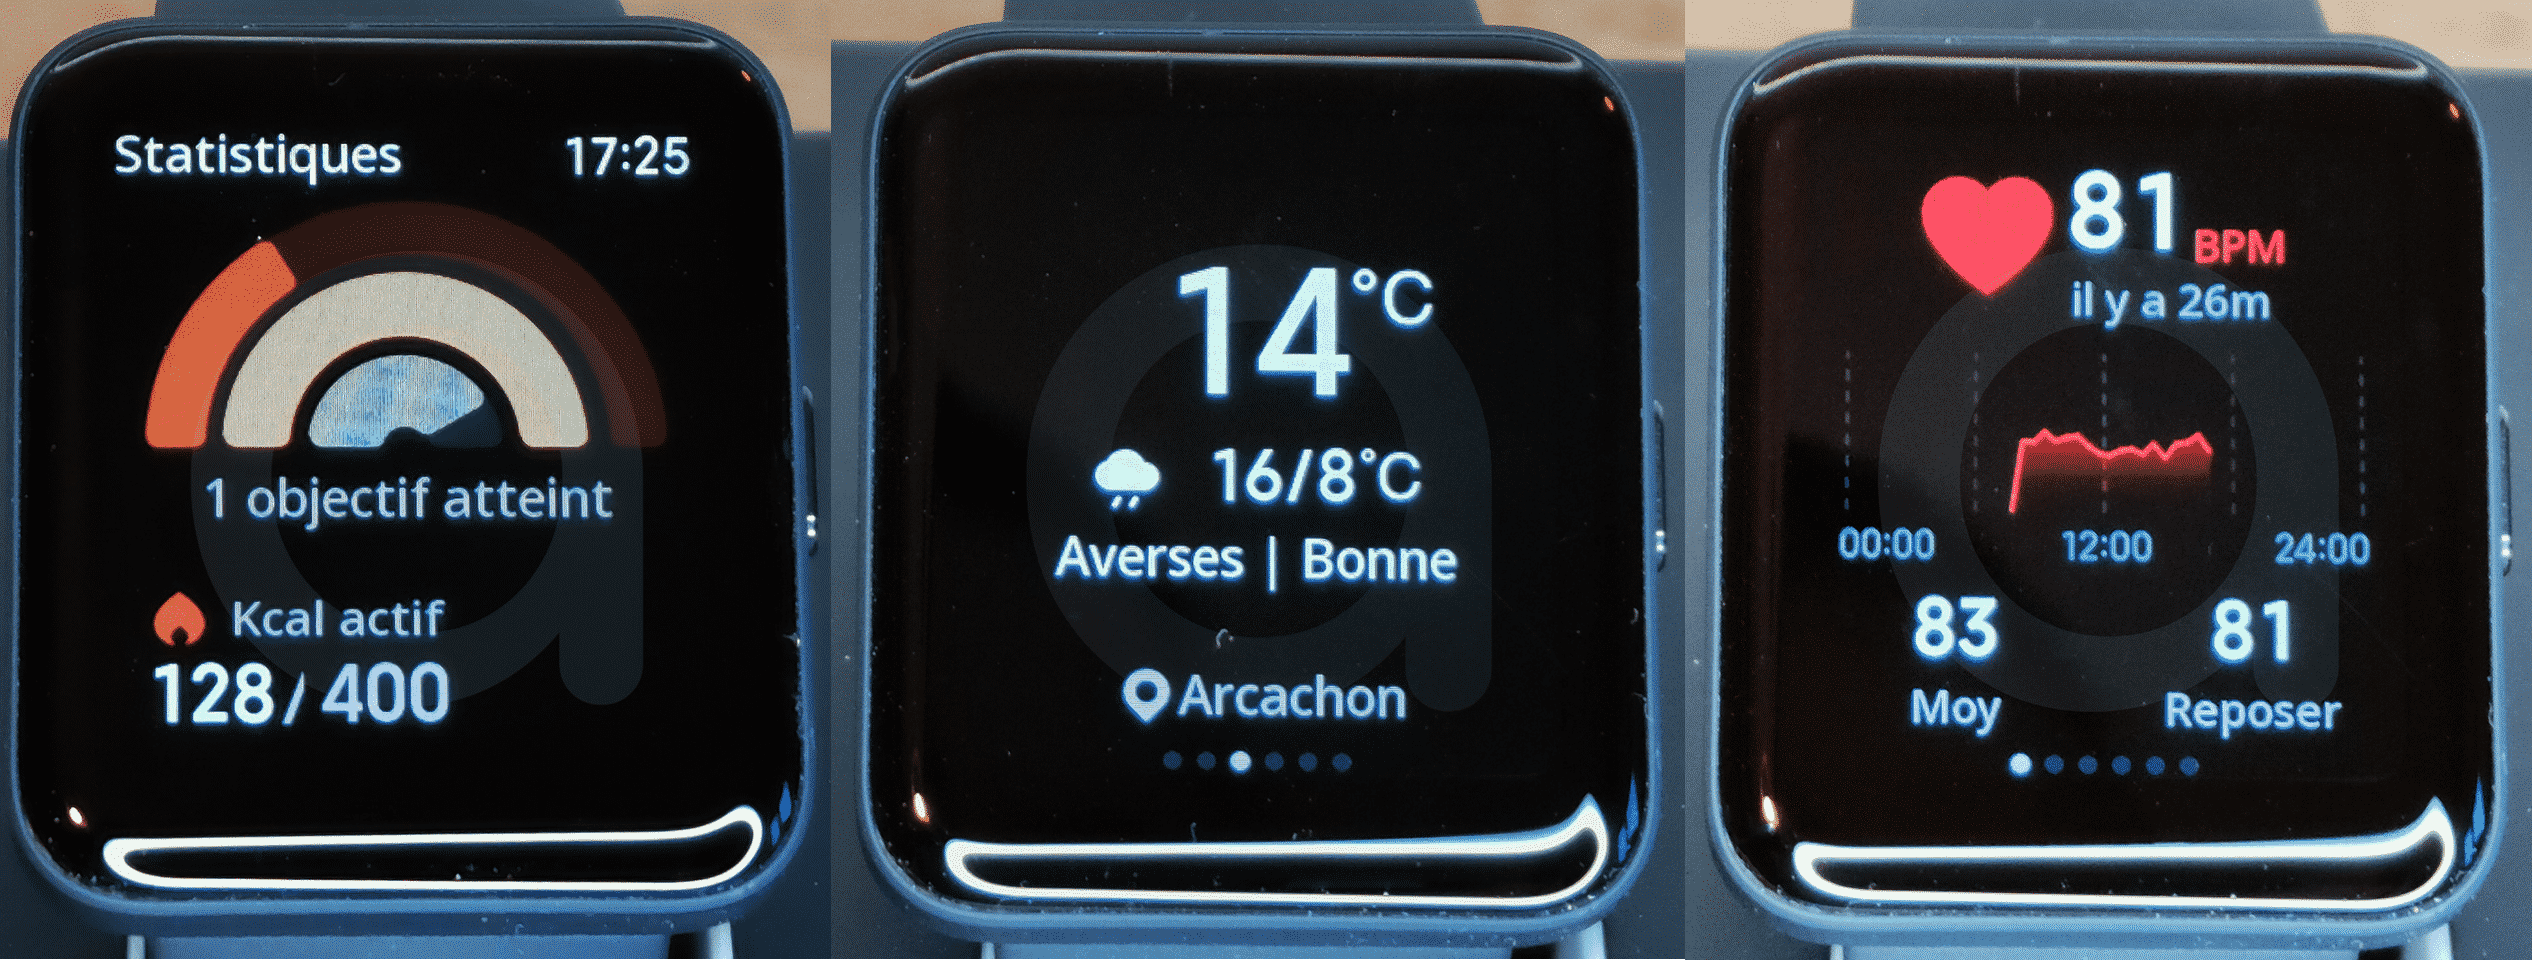 Test de la Xiaomi Redmi Watch 2 Lite : à ce prix, on ne va pas